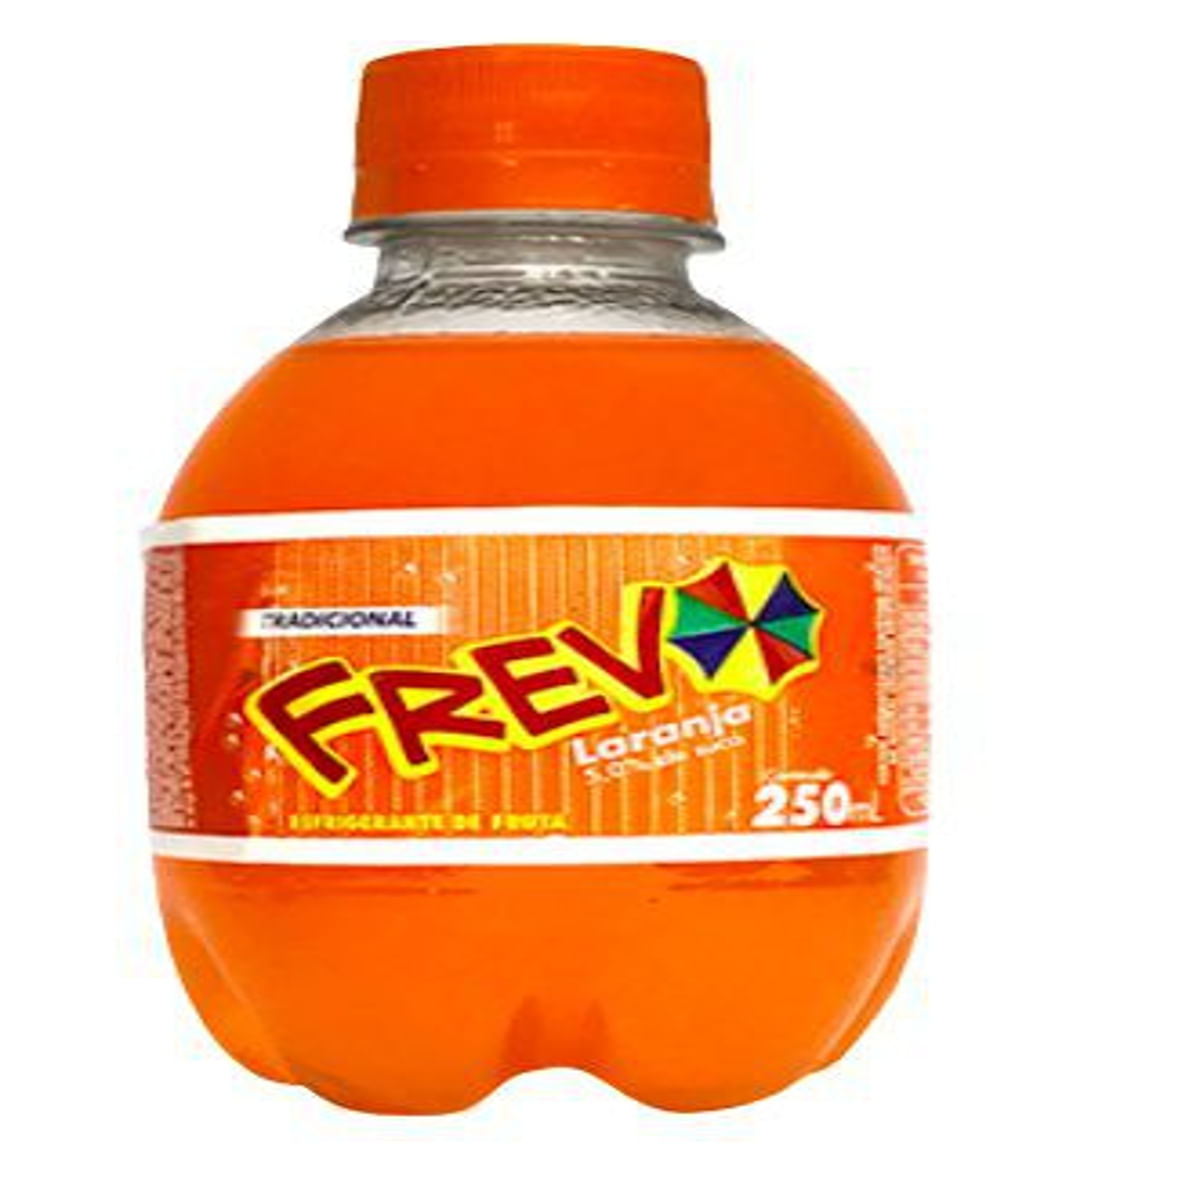 refrig-laranja-frevo-250ml-1.jpg